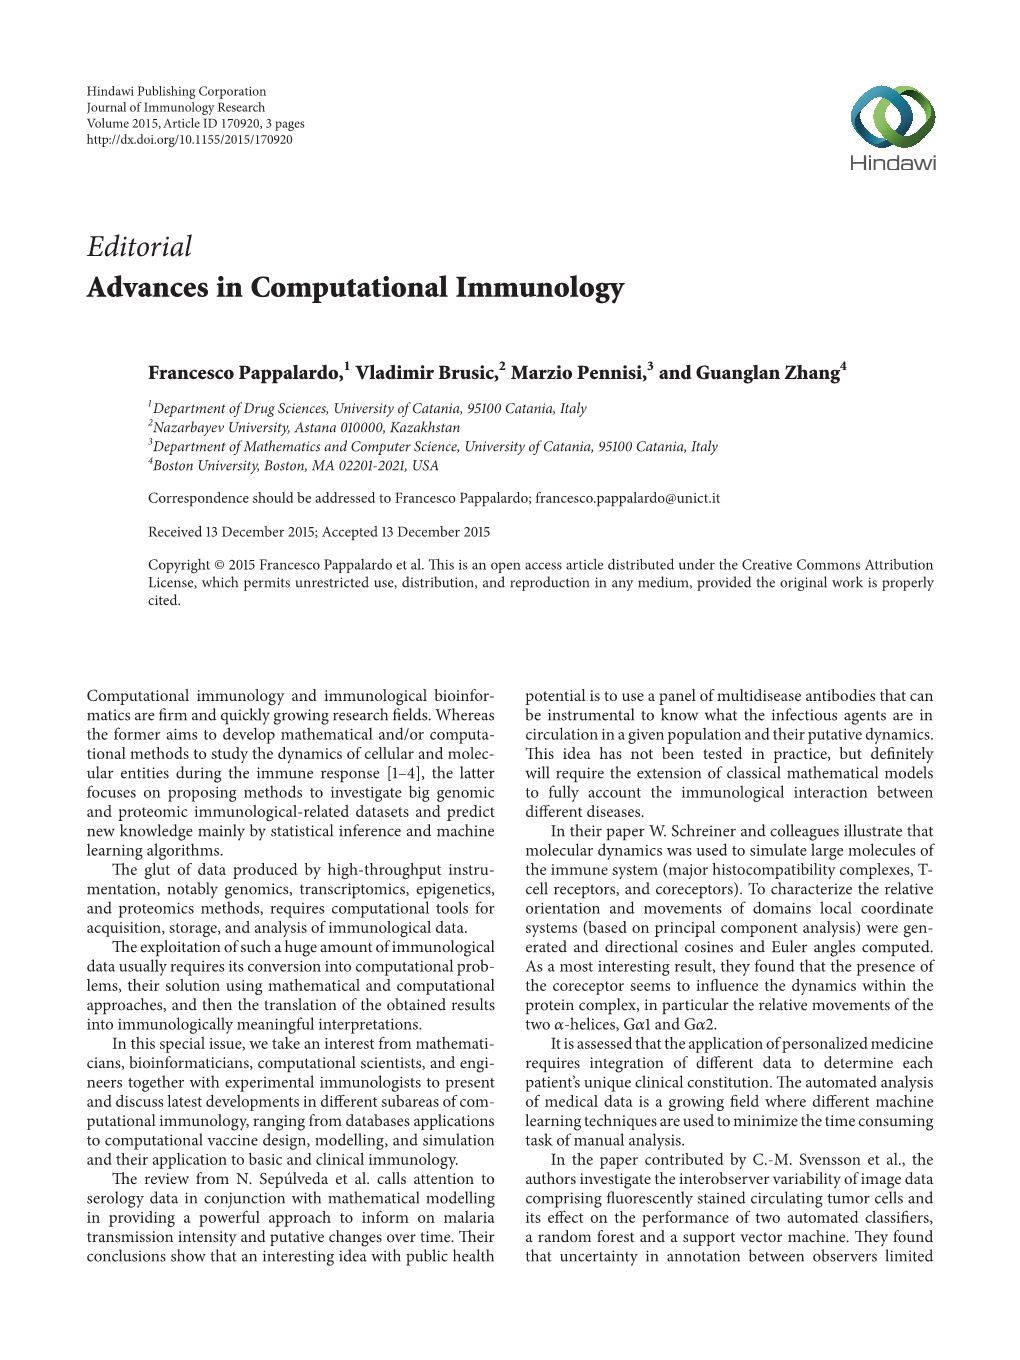 Editorial Advances in Computational Immunology